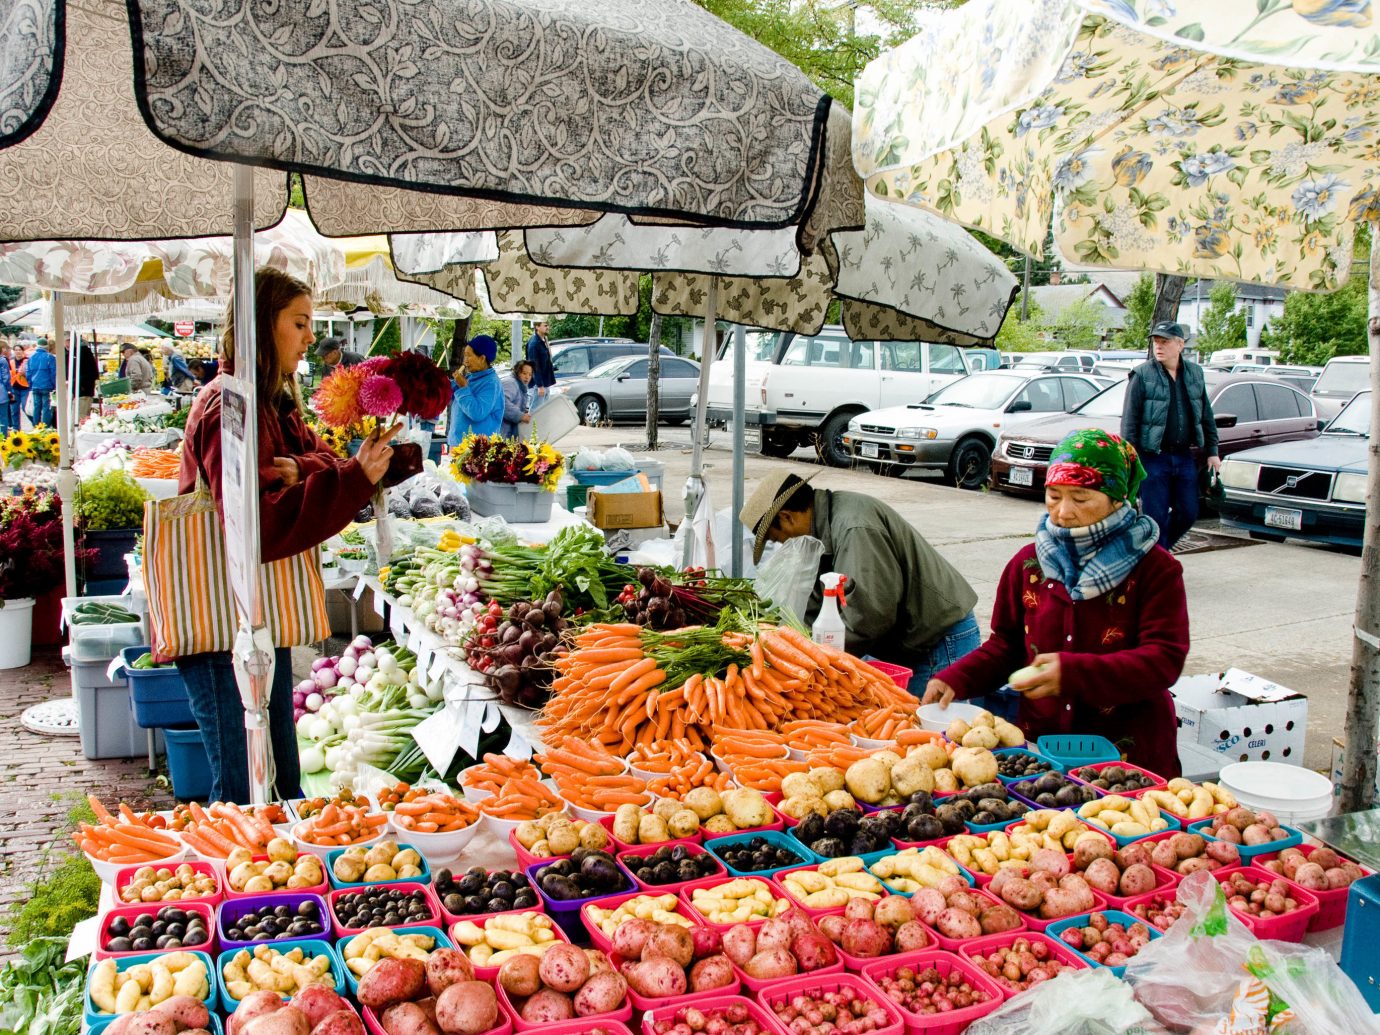 Trip Ideas marketplace market outdoor produce public space vendor stall bazaar scene food local food City fruit greengrocer vegetable brunch colorful fresh